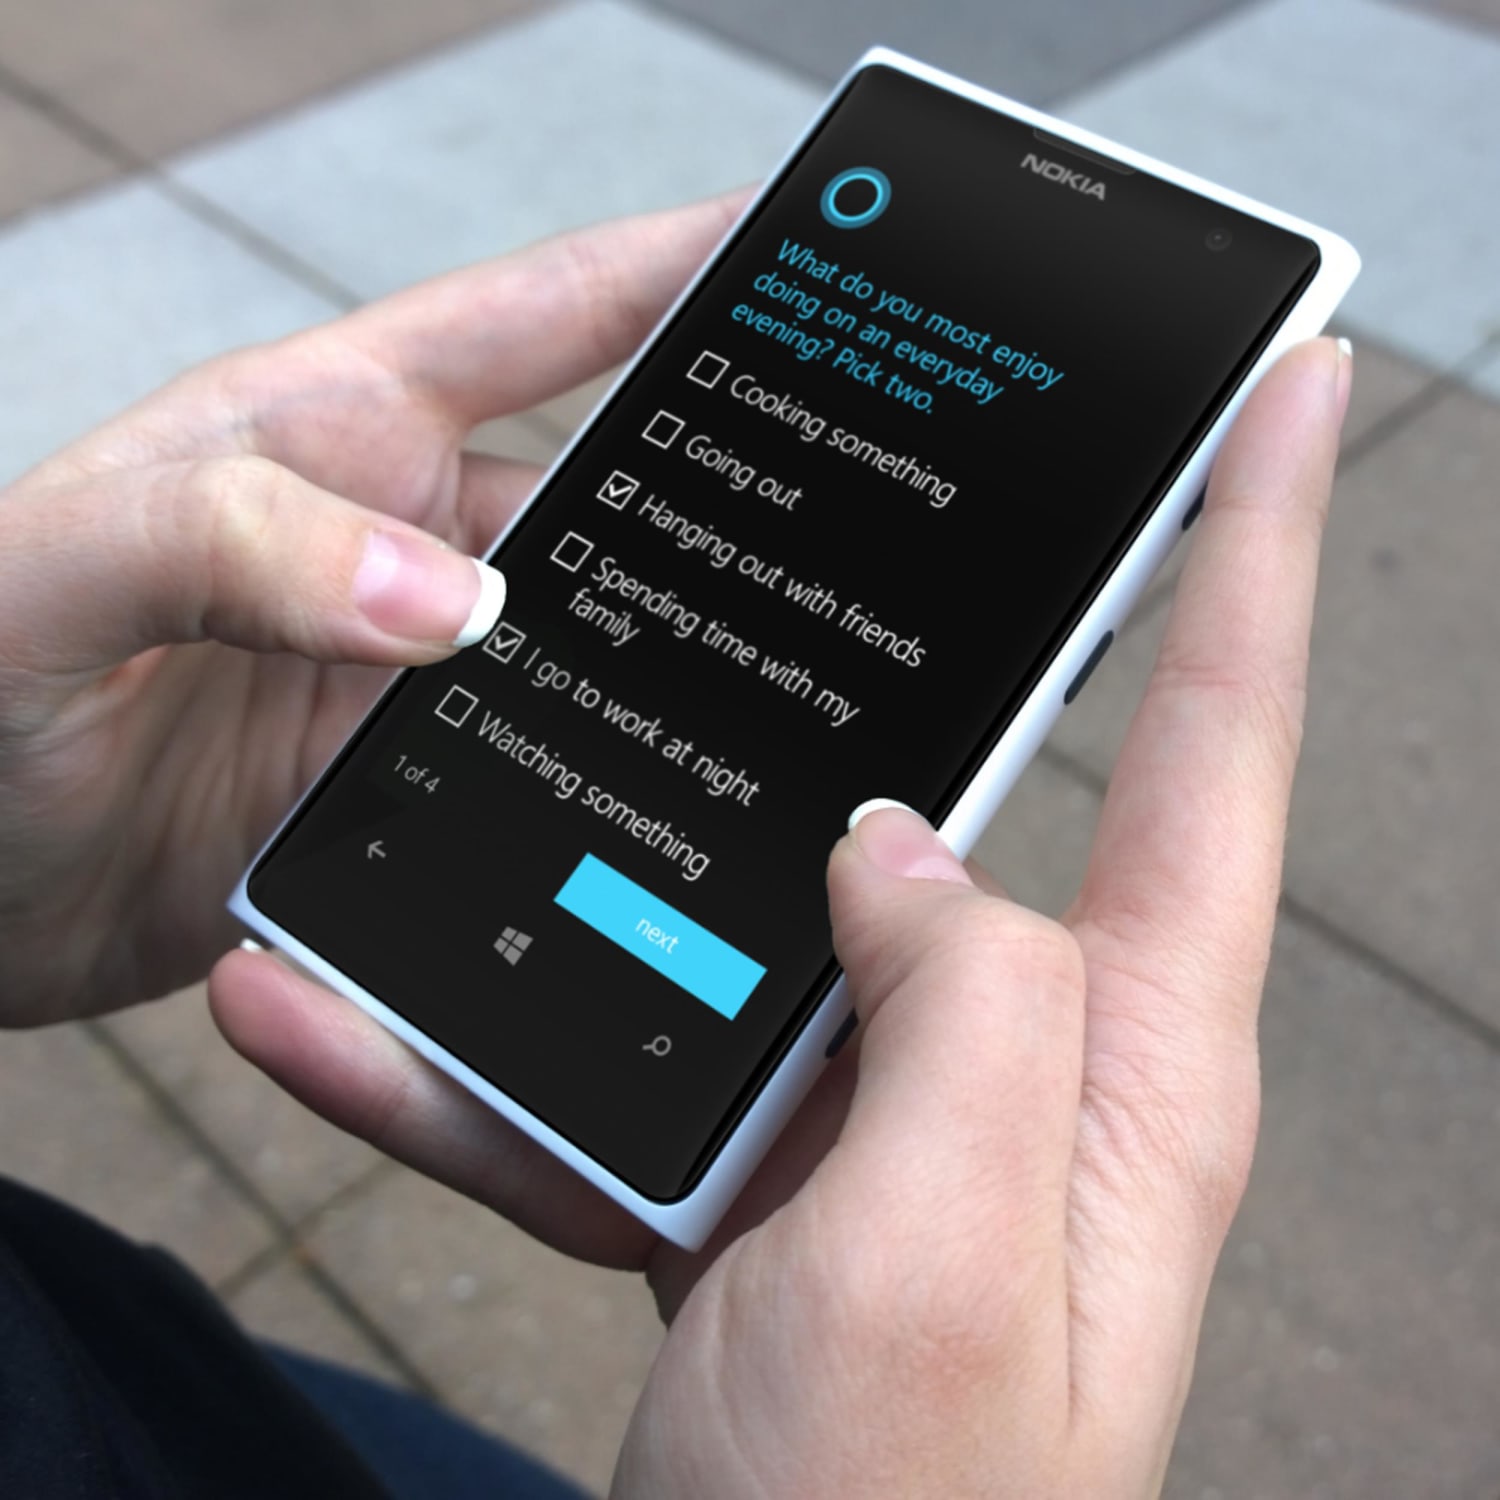 Microsoft shows off Cortana for Windows Phone 8.1 - CNET